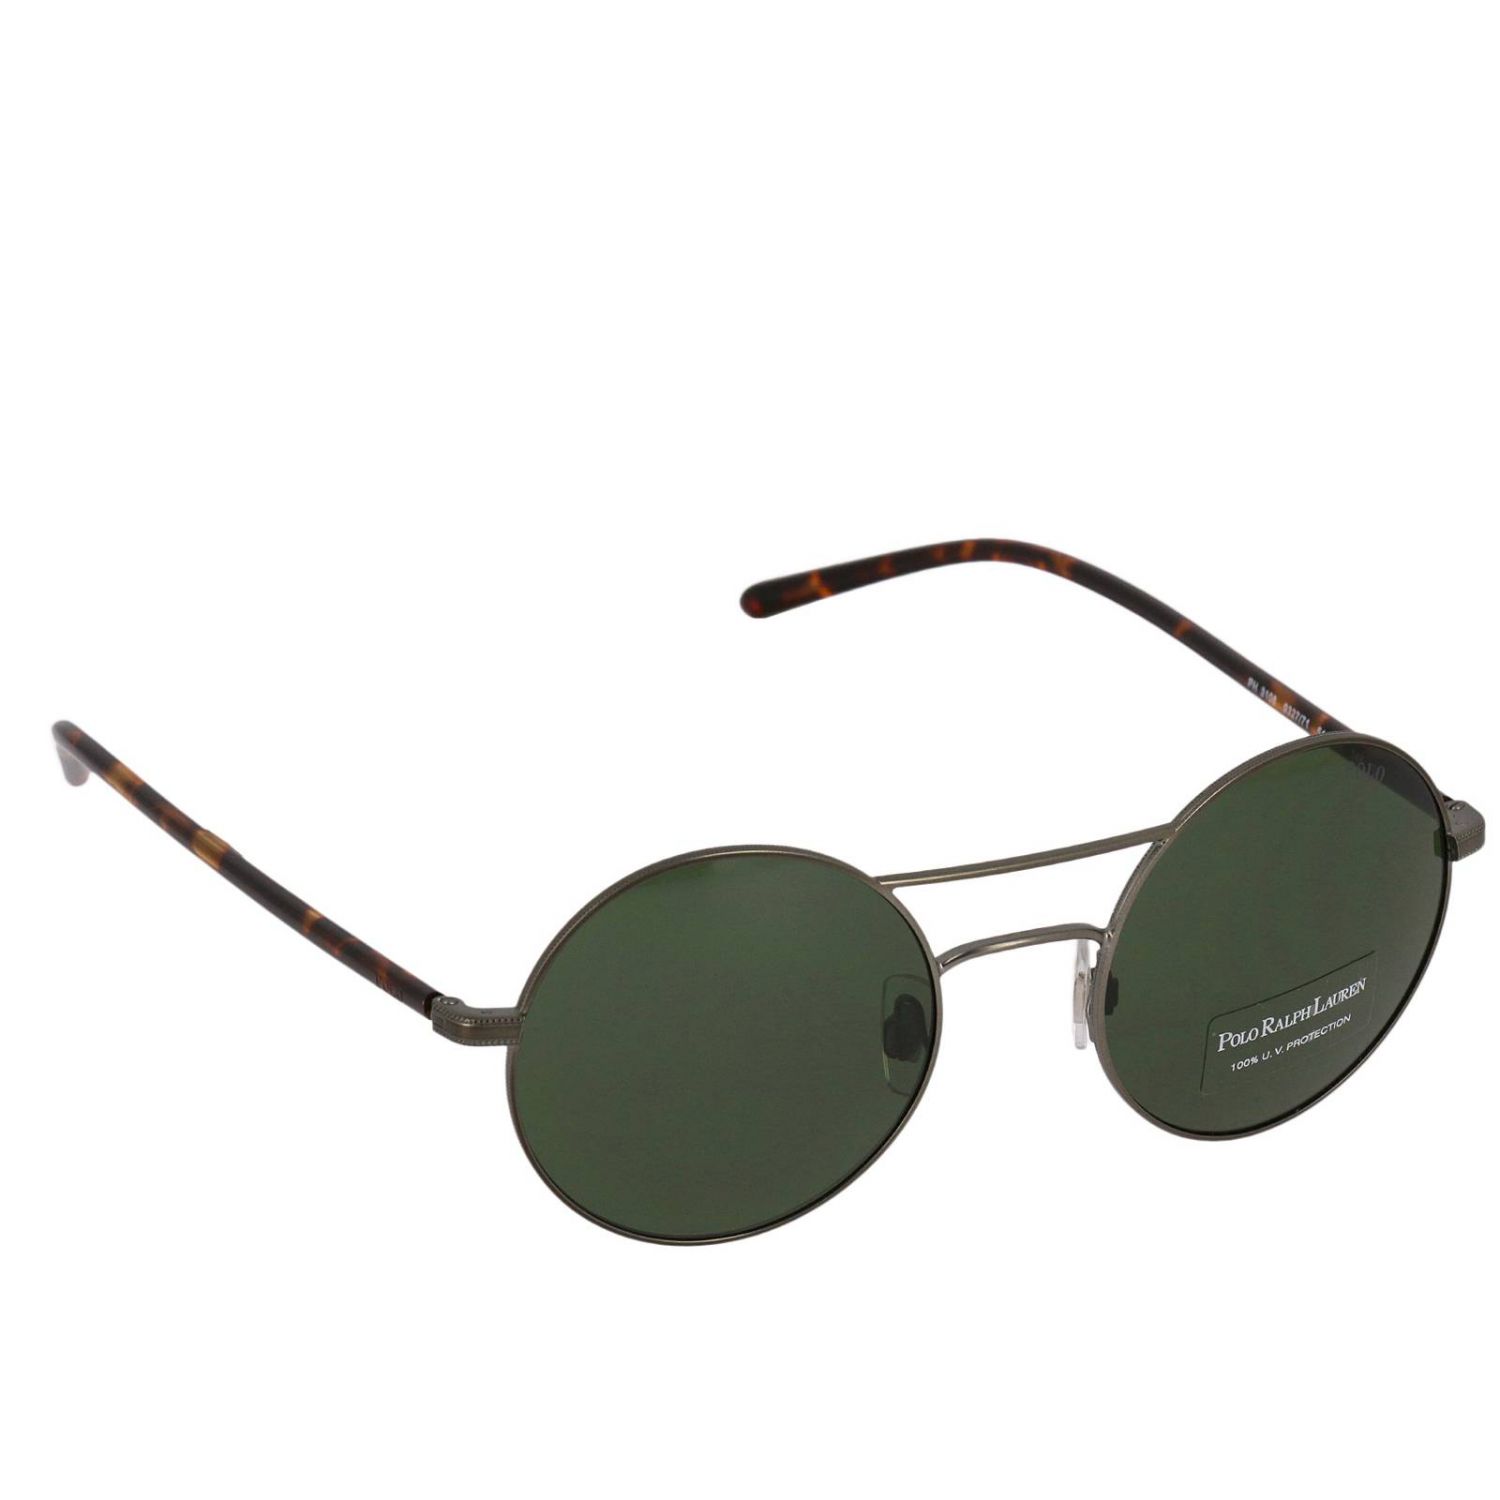 POLO RALPH LAUREN: sunglasses for woman - Military | Polo Ralph Lauren  sunglasses PH3108 online on 